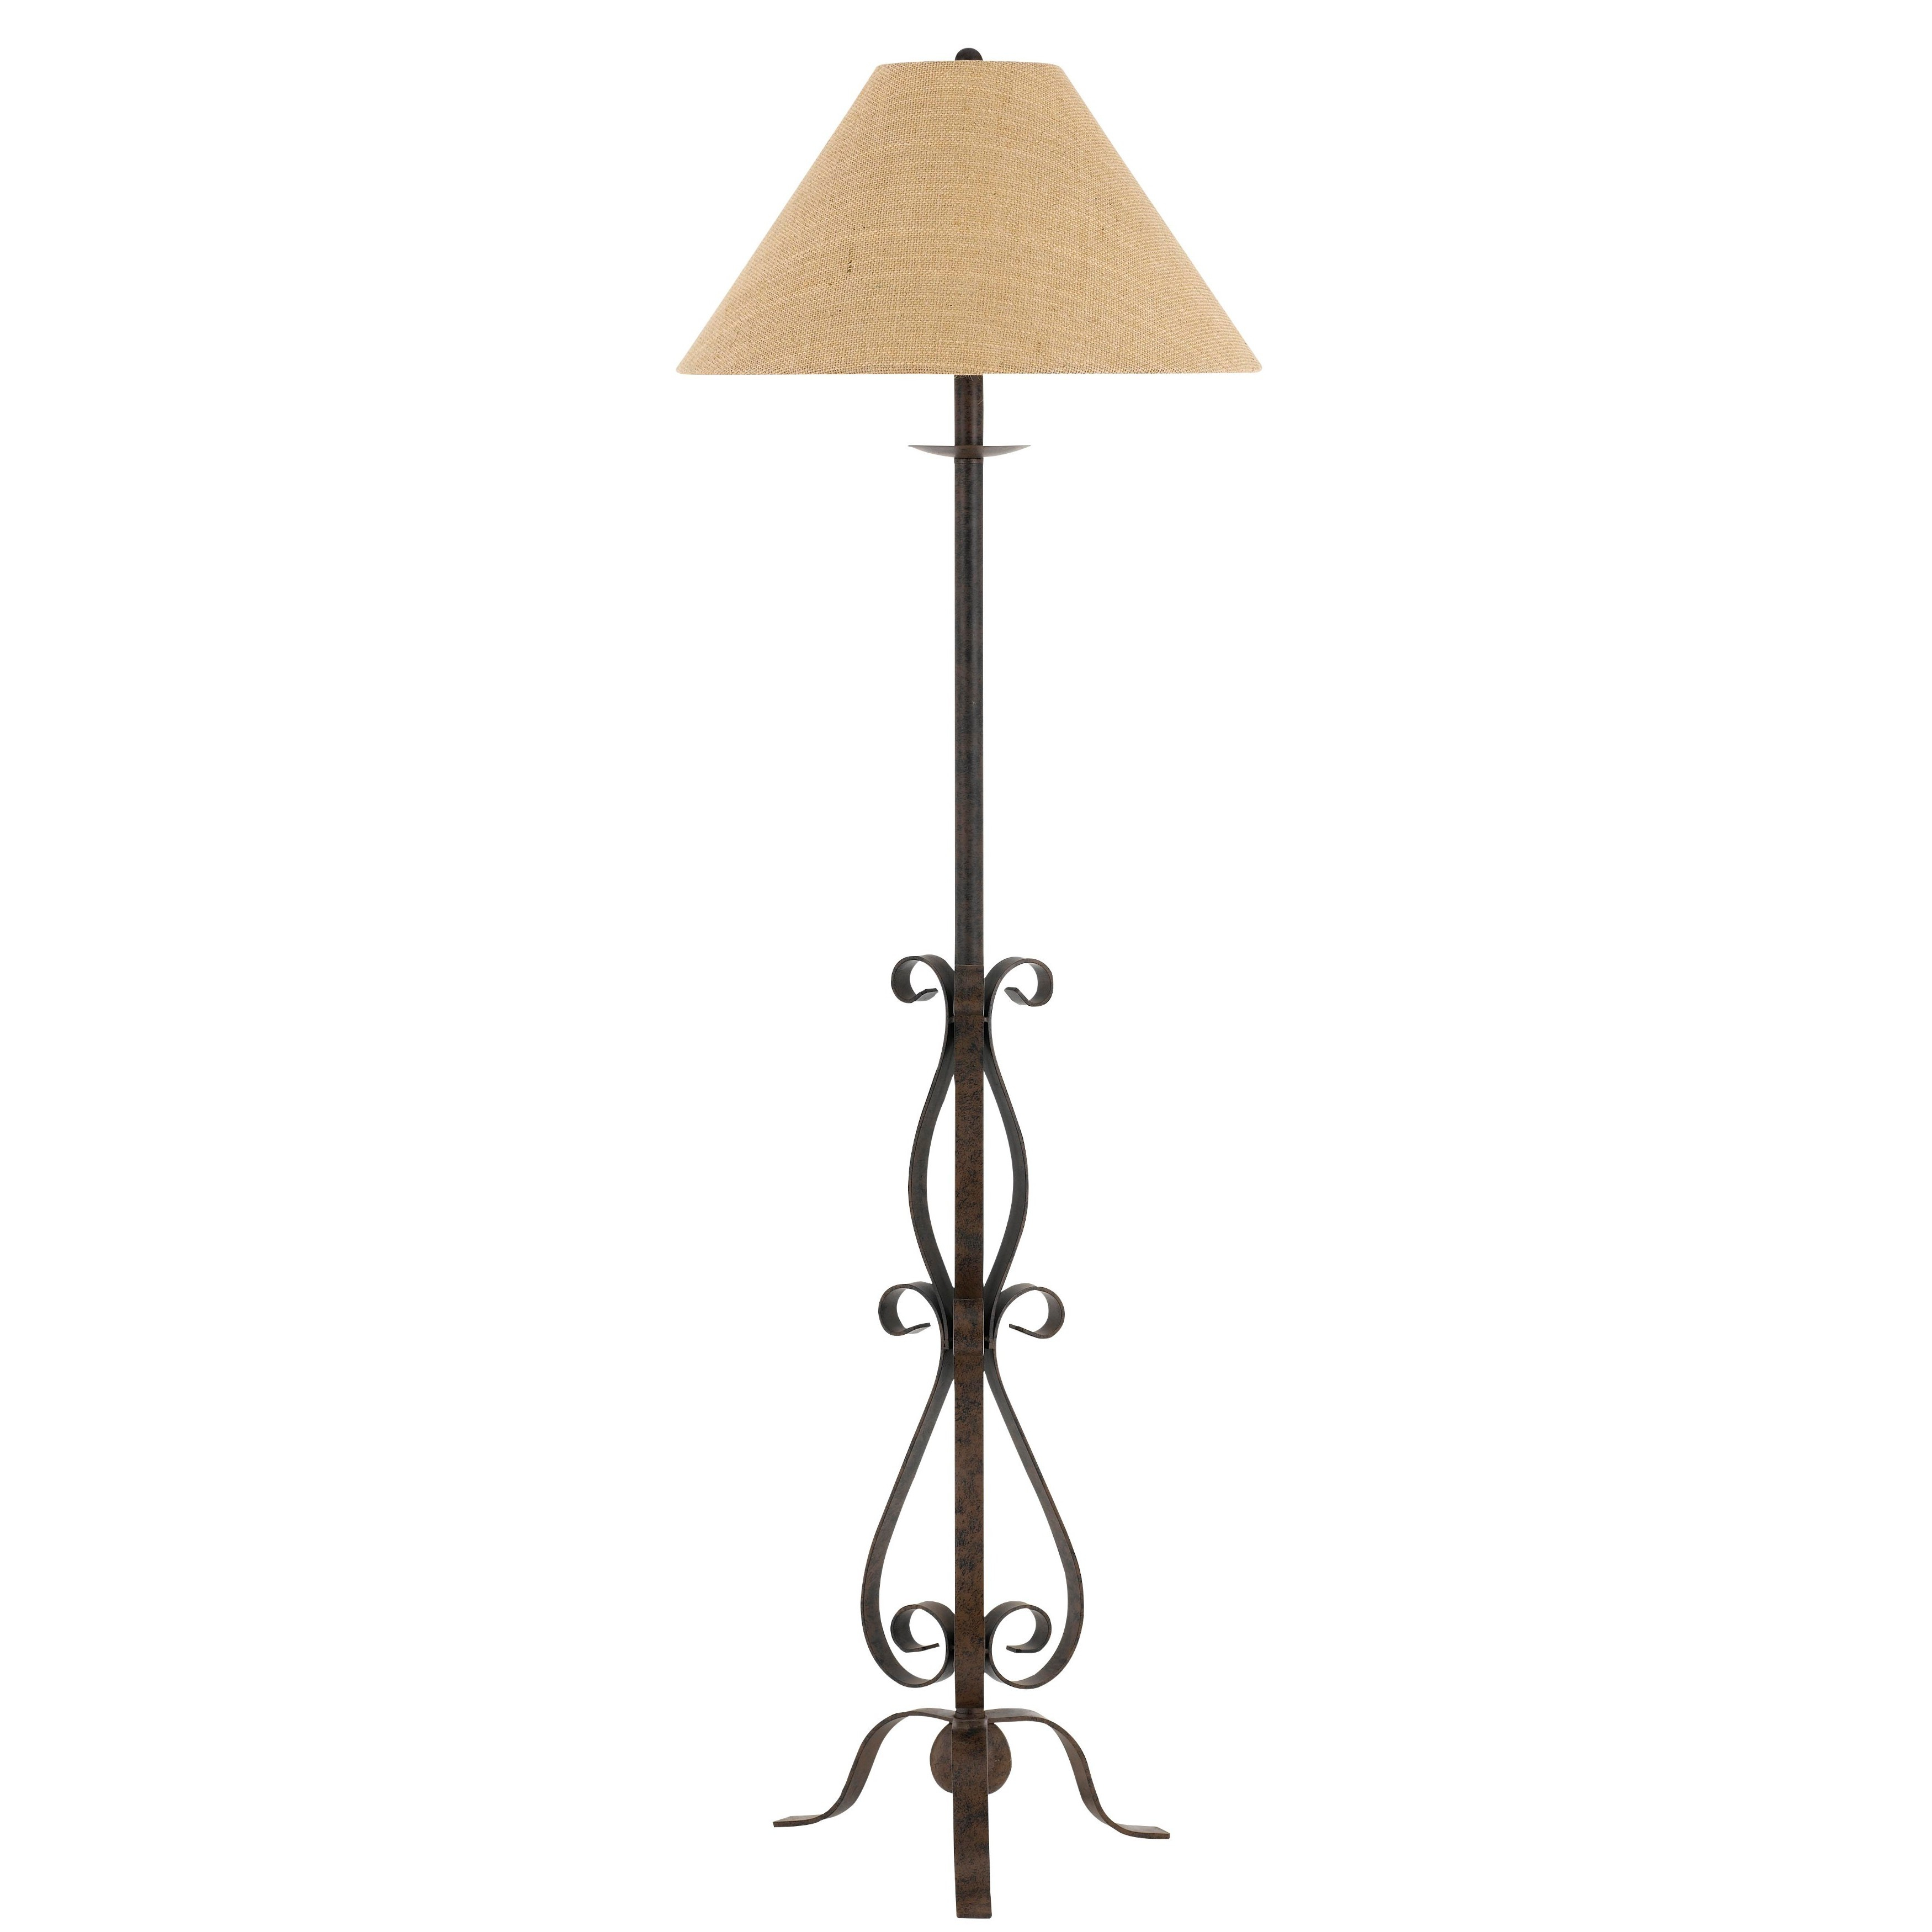 Ekalaka Tan Wrought Iron Floor Lamp With Burlap Shade throughout sizing 3500 X 3500